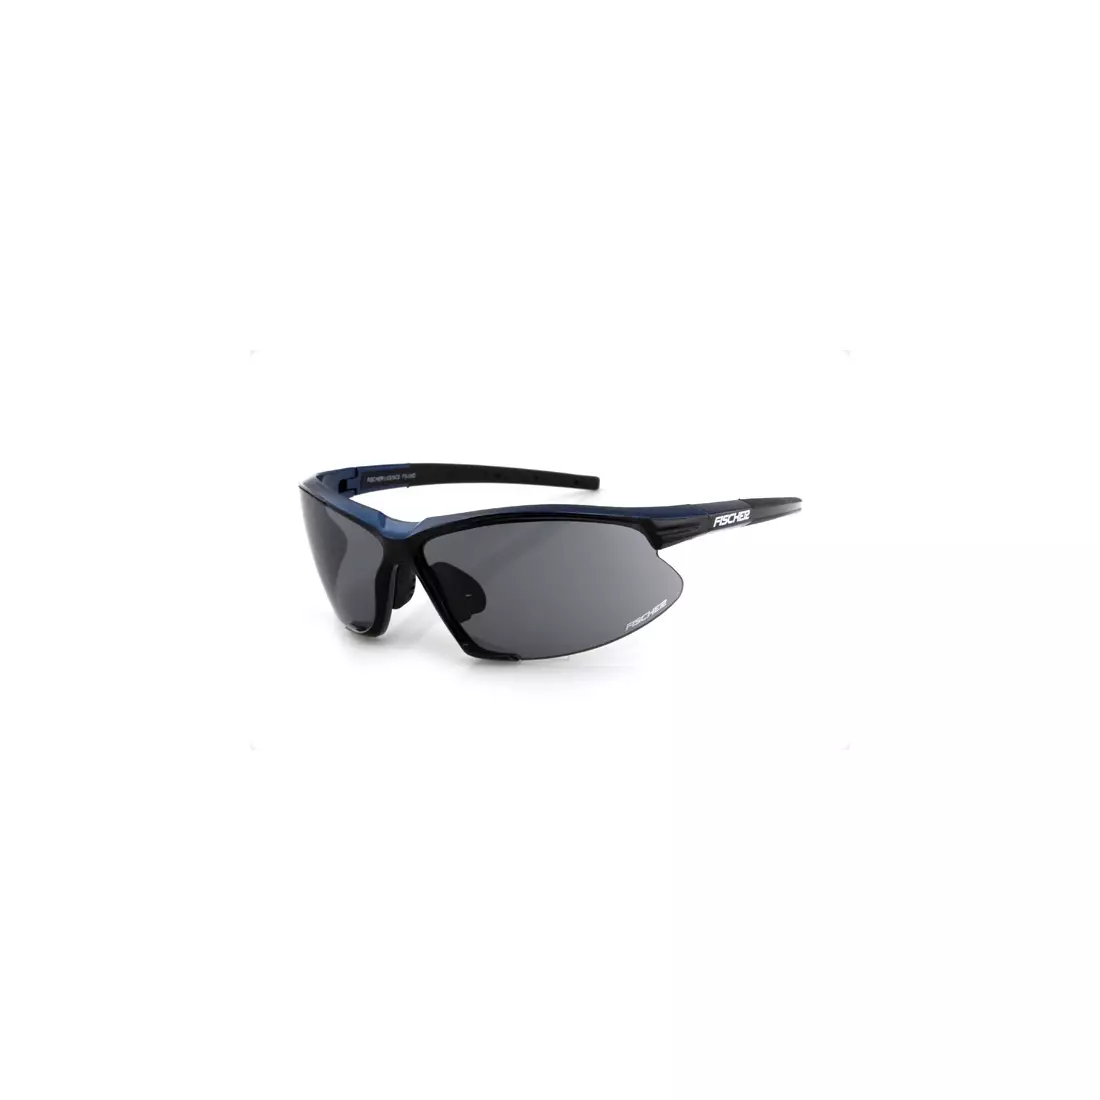 FISCHER - sports glasses FS-05D - color: Black and blue